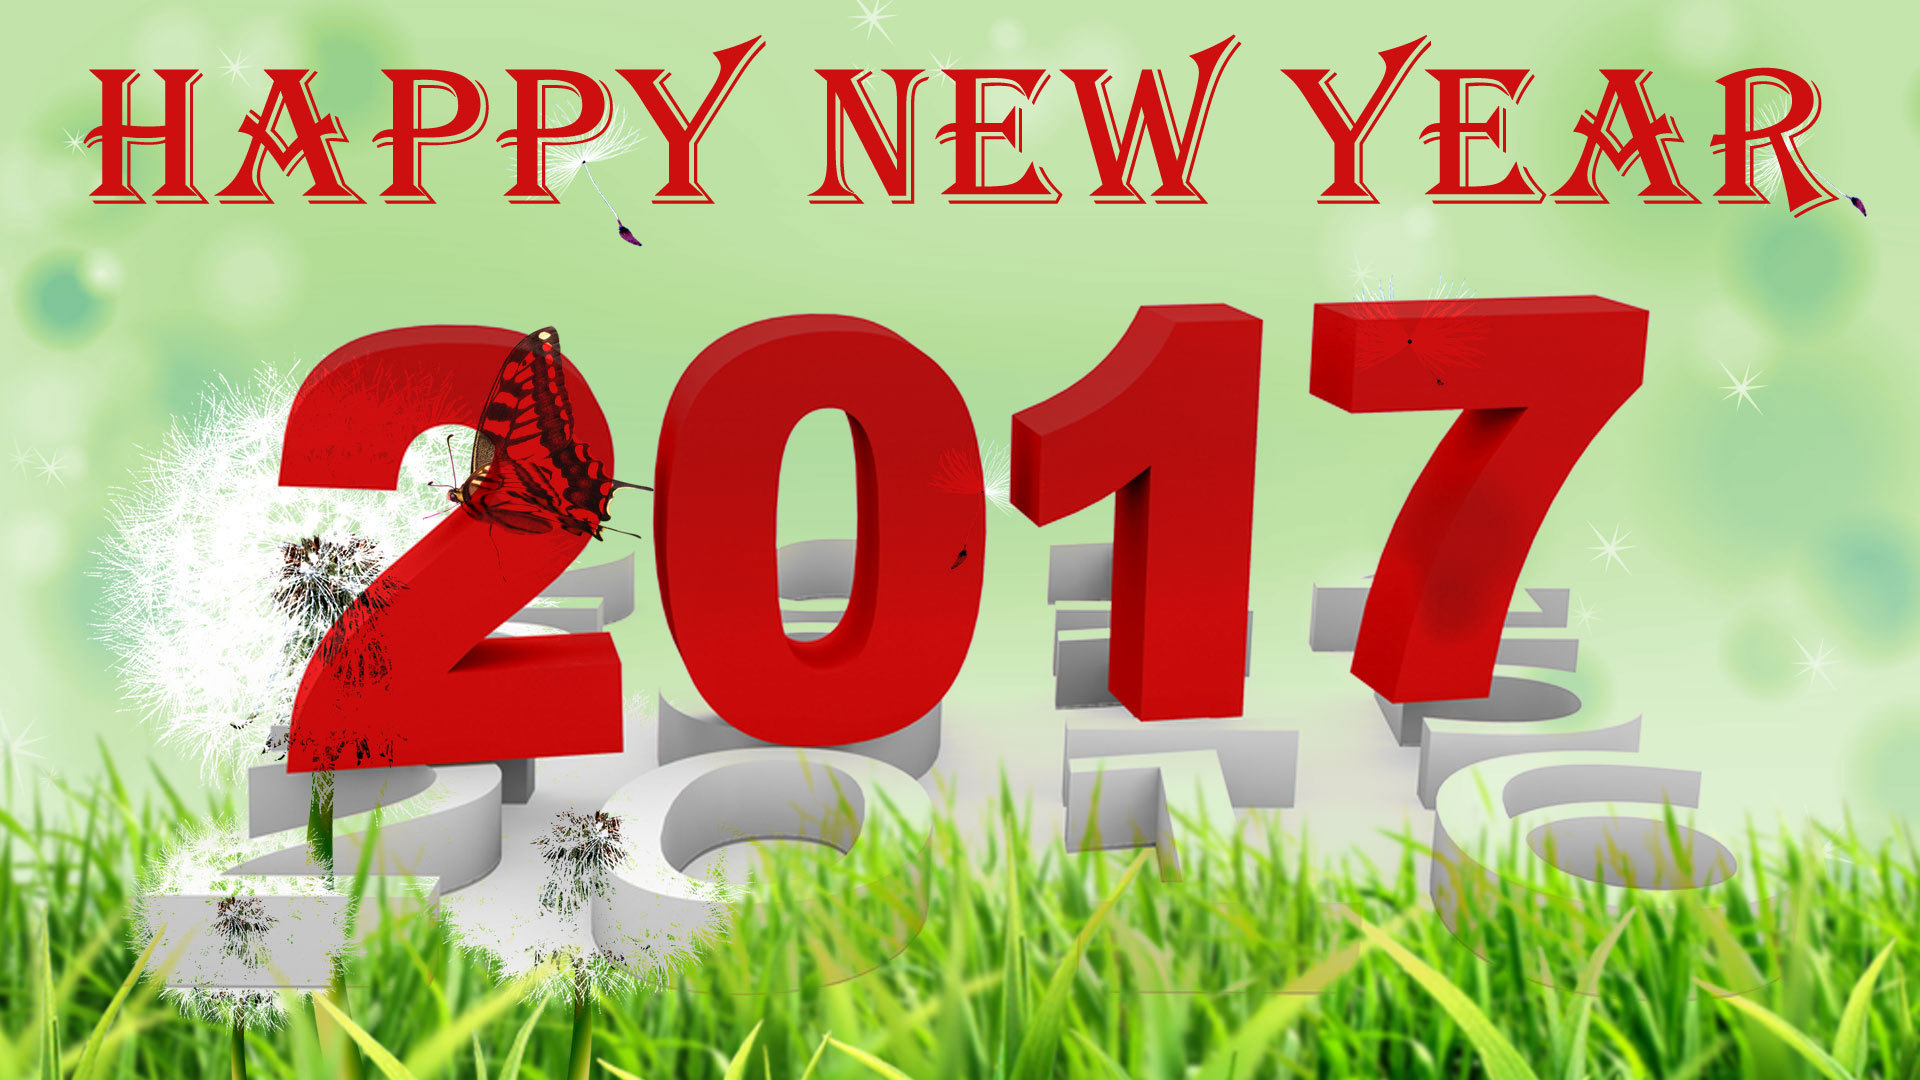 2017-happy-new-year-background-0.jpg (1920×1080)